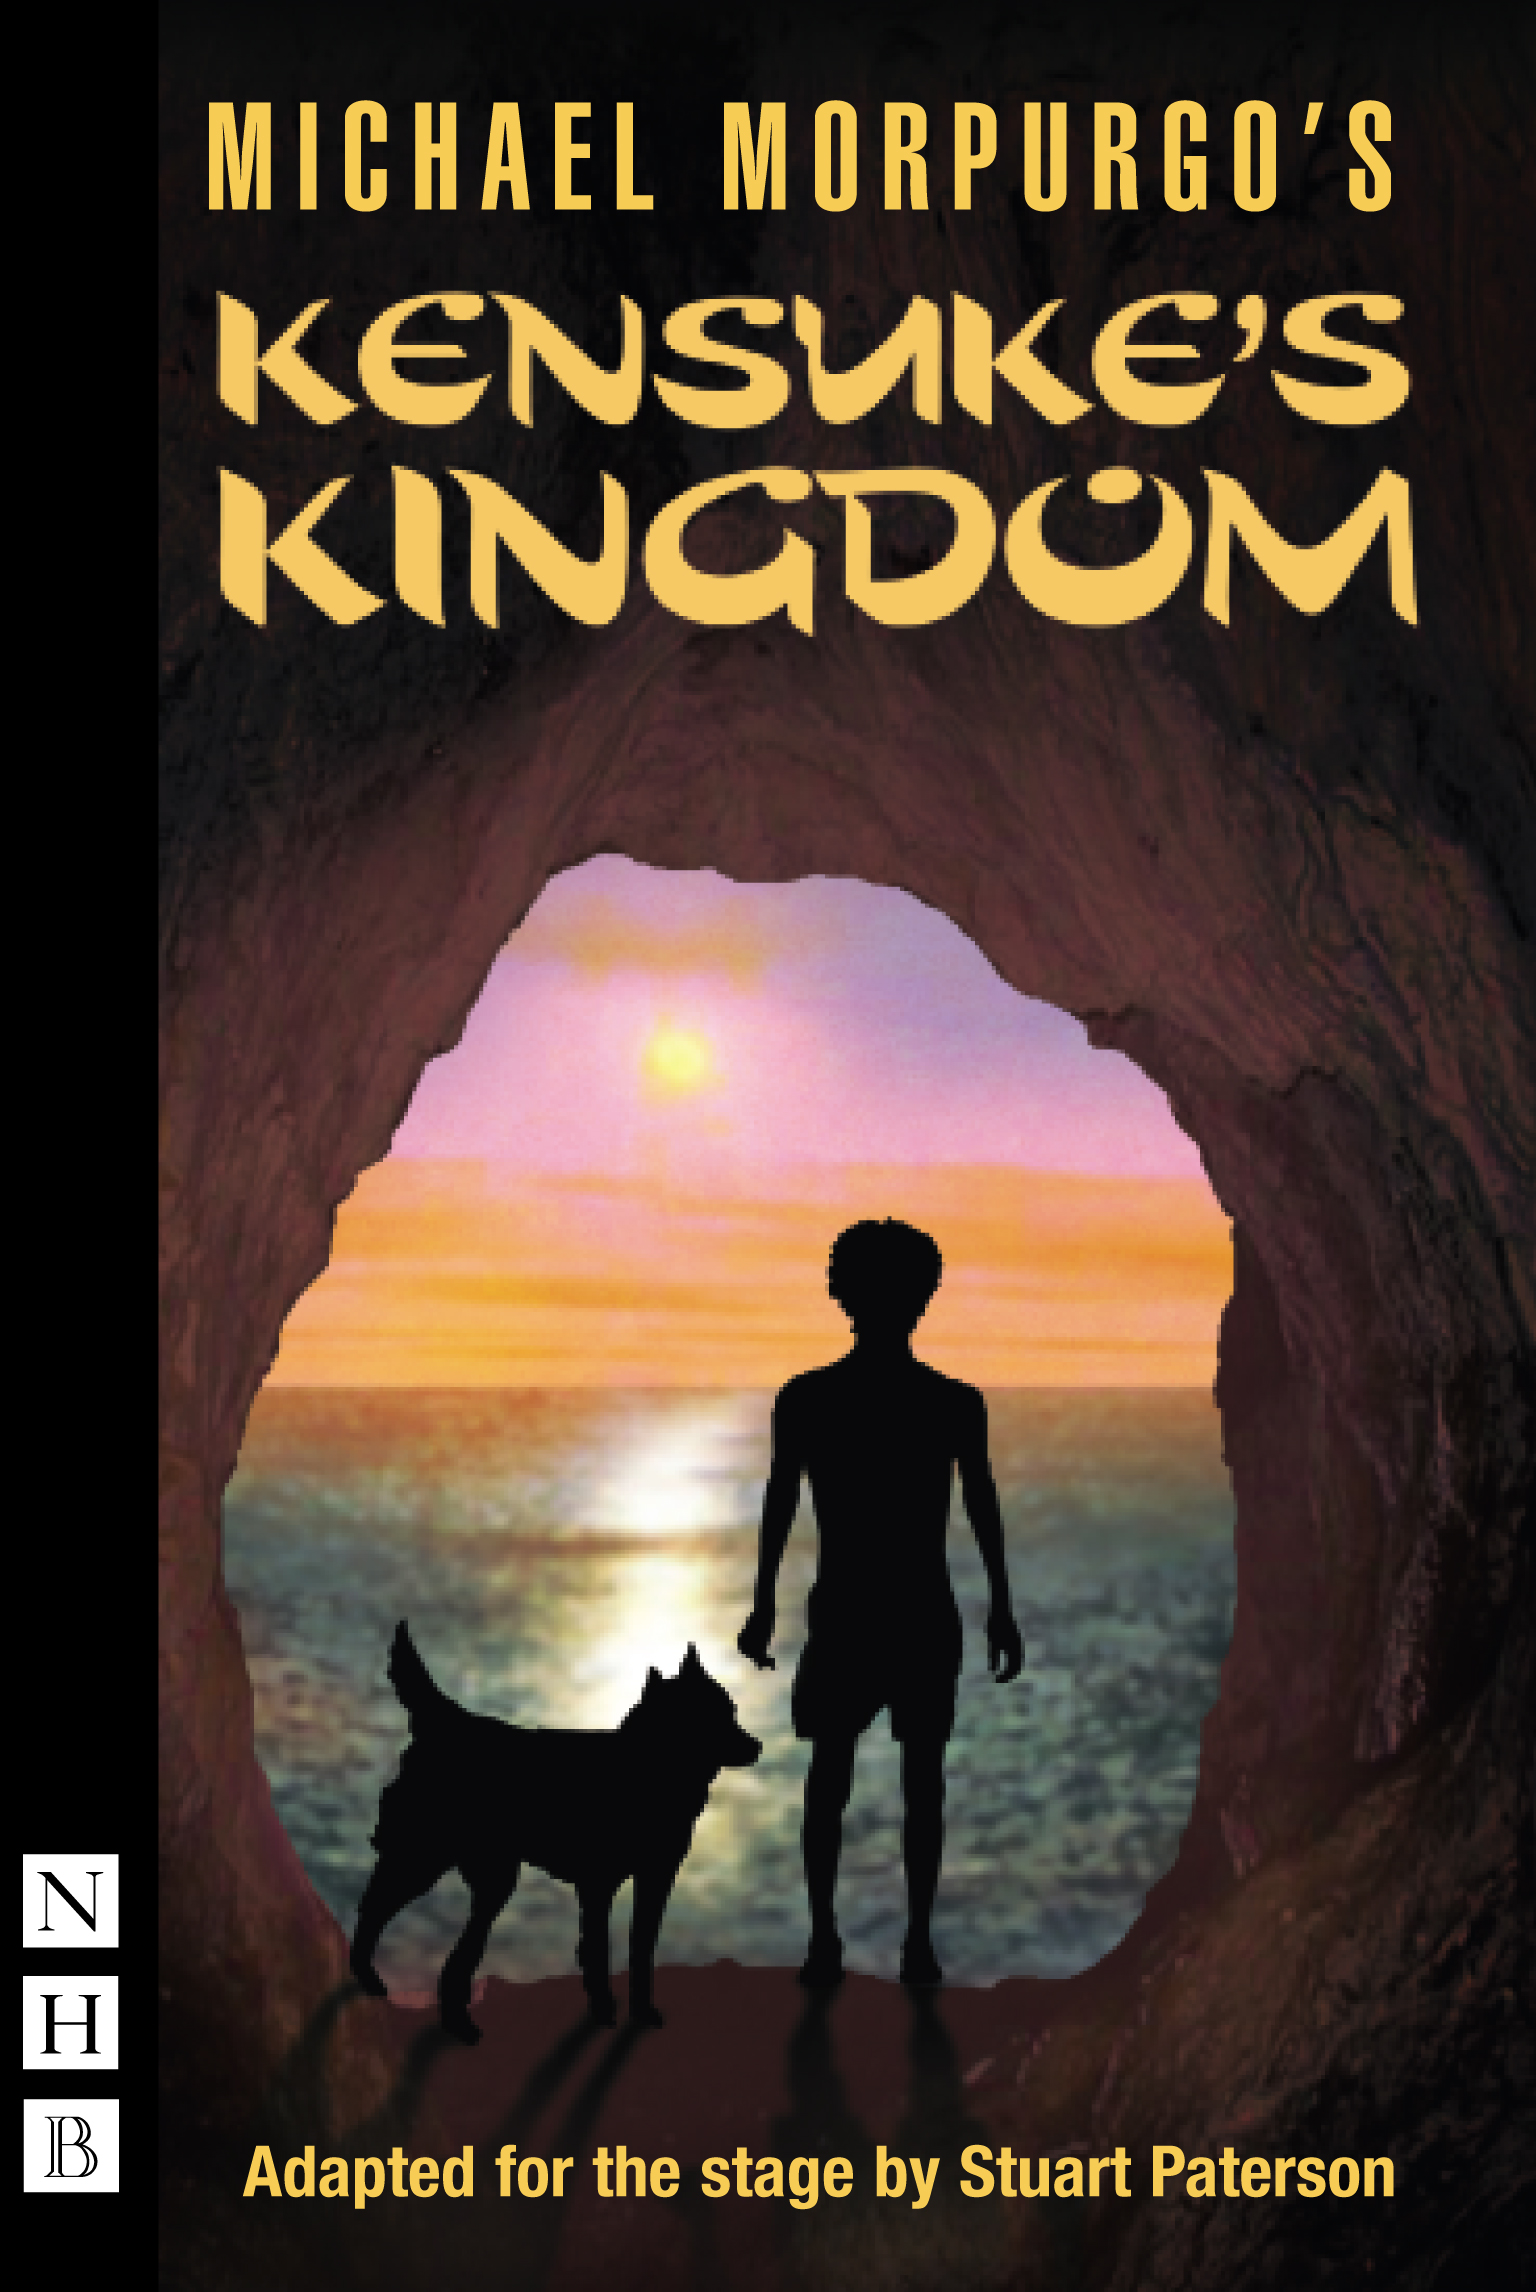 kensuke's kingdom book review ks2